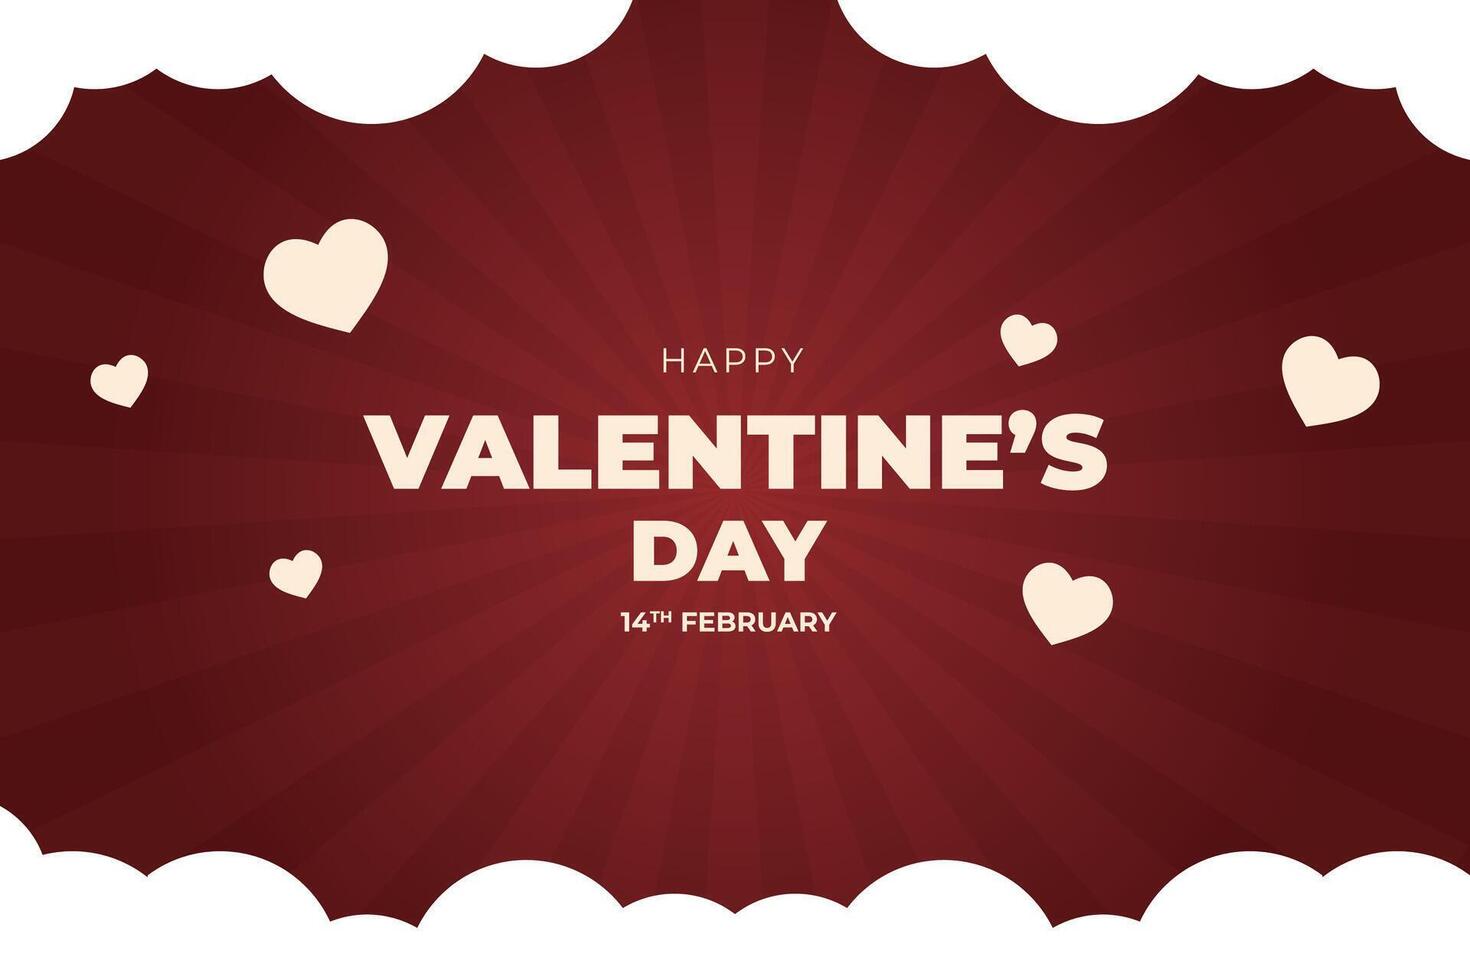 Celebrate Happy Valentine's Day, Valentine's Day hearts background. vector